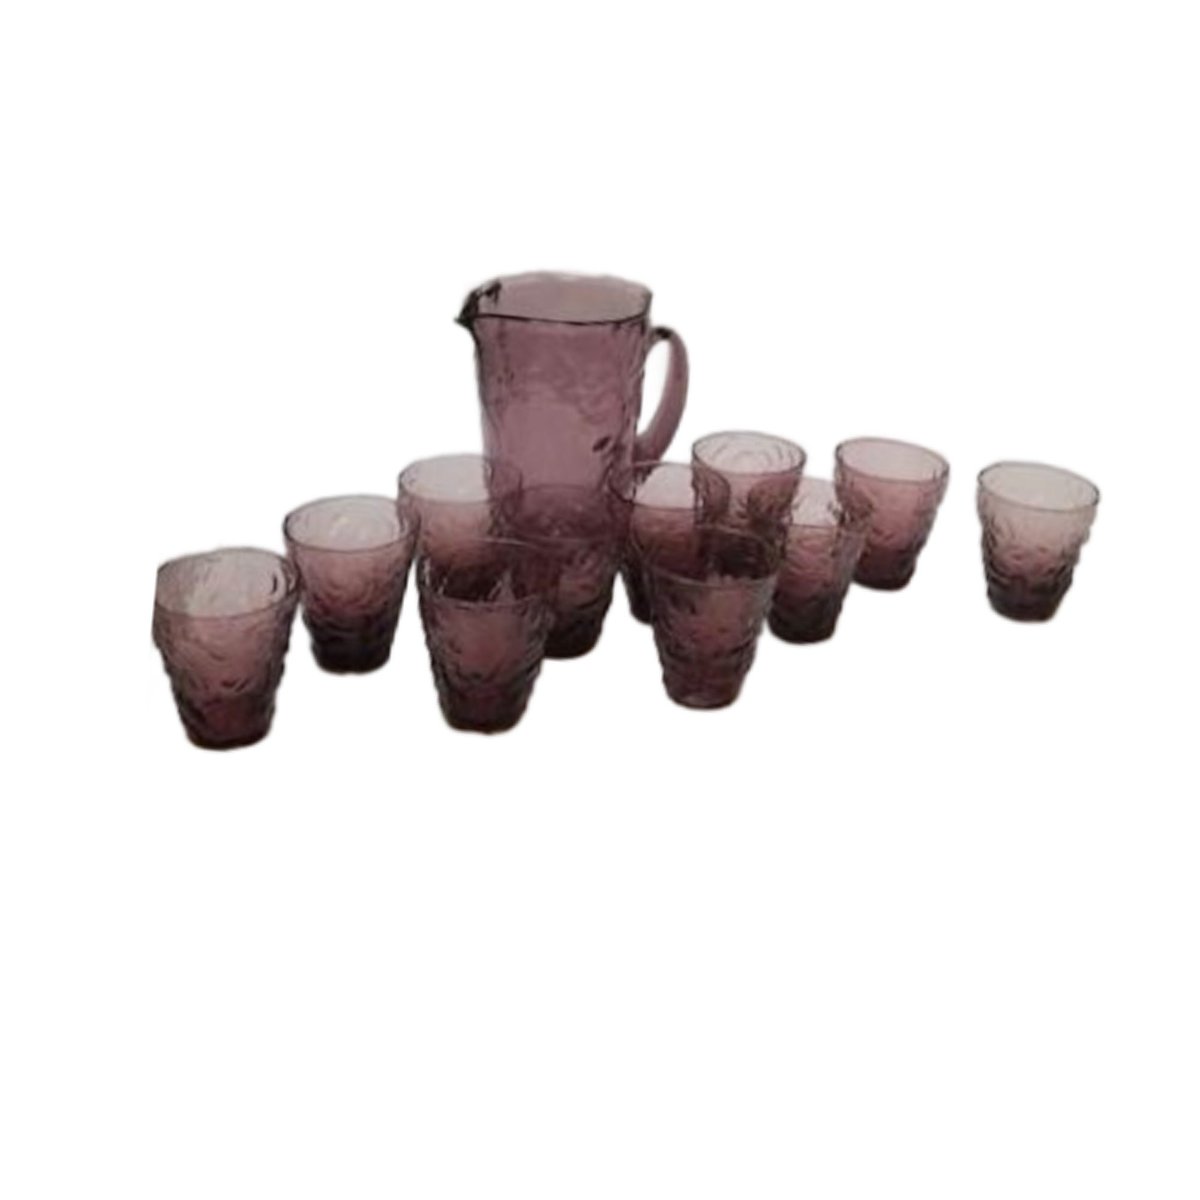 Vintage Amethyst Crinkle Pitcher Cocktail Set by Morgantown Glass, 12 Pc Set, Free Shipping tuppu.net/a7a0fcba #Etsy #JunkYardBlonde #MadMenBarware